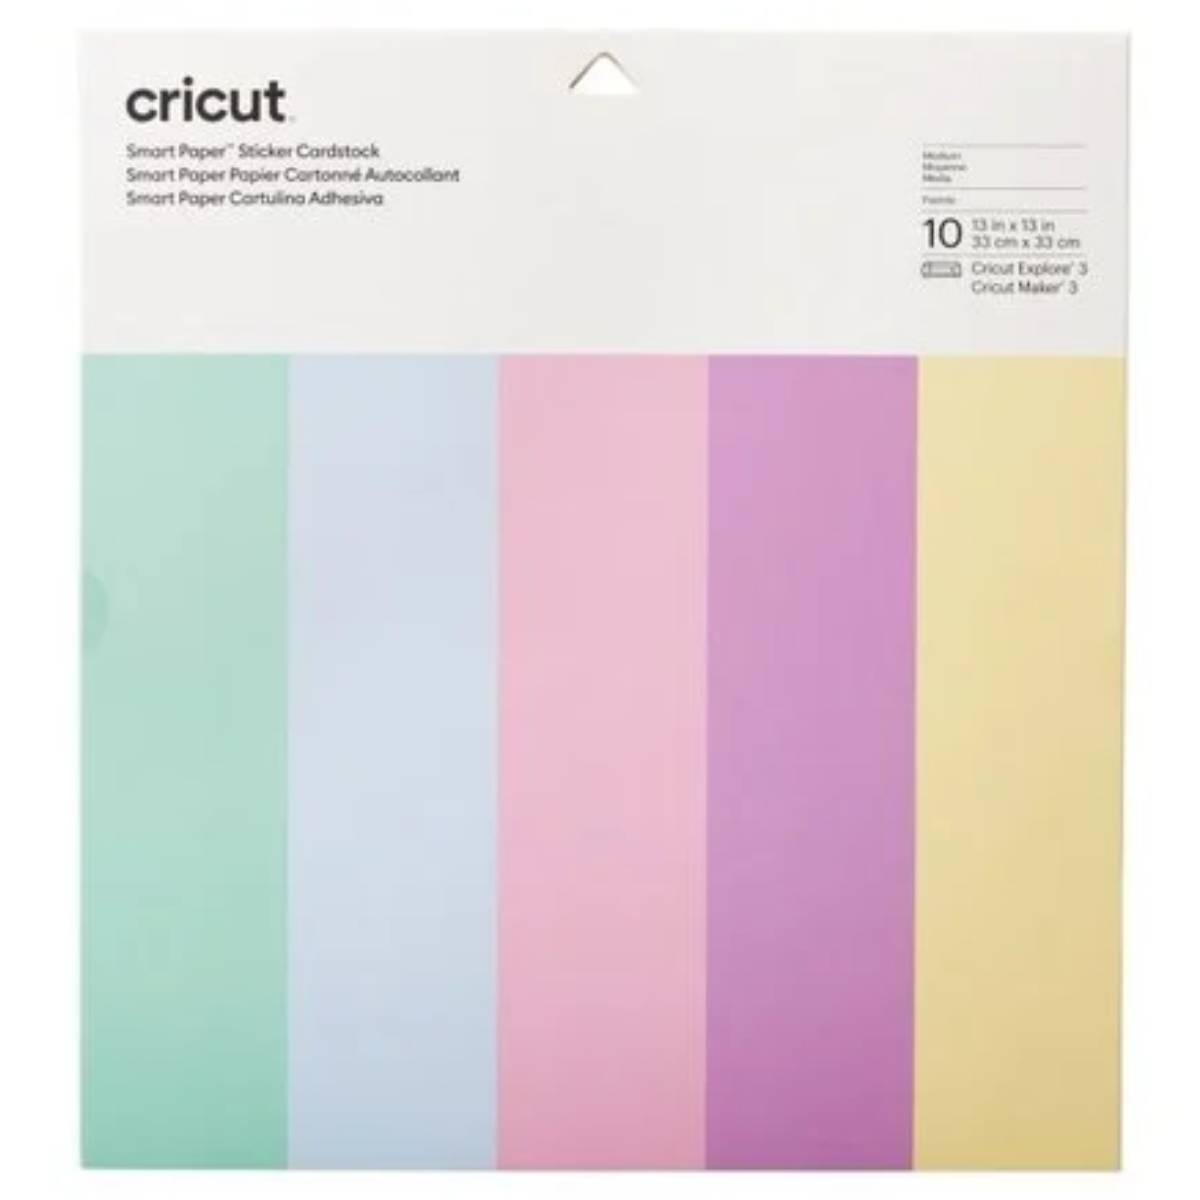 מדבקה קארדסטוק צבעי פסטל 33*33 ס"מ Cricut Smart Paper Sticker Cardstock